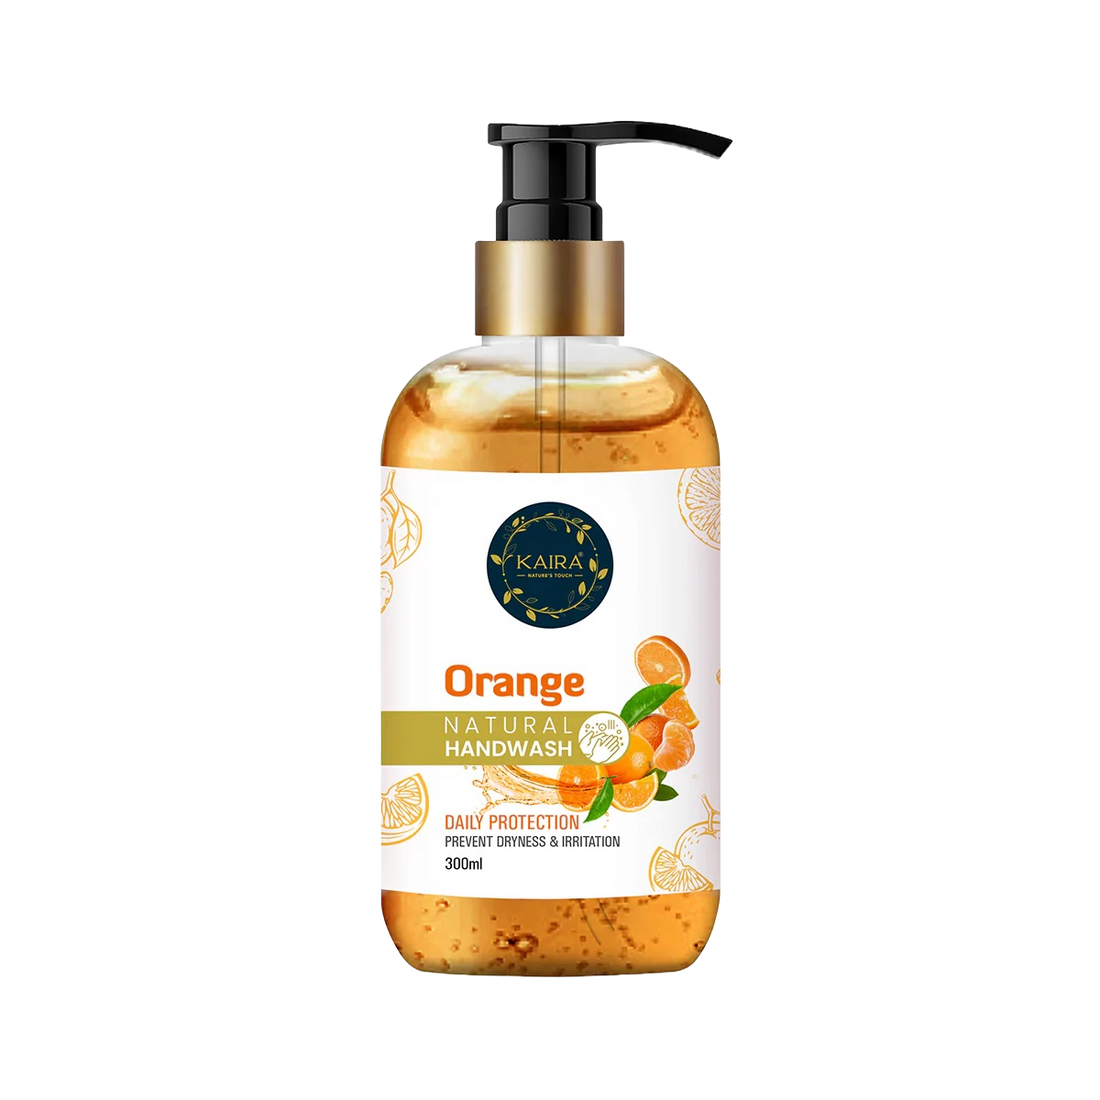 Kaira Orange Handwash - Soft, healthy and clean hands